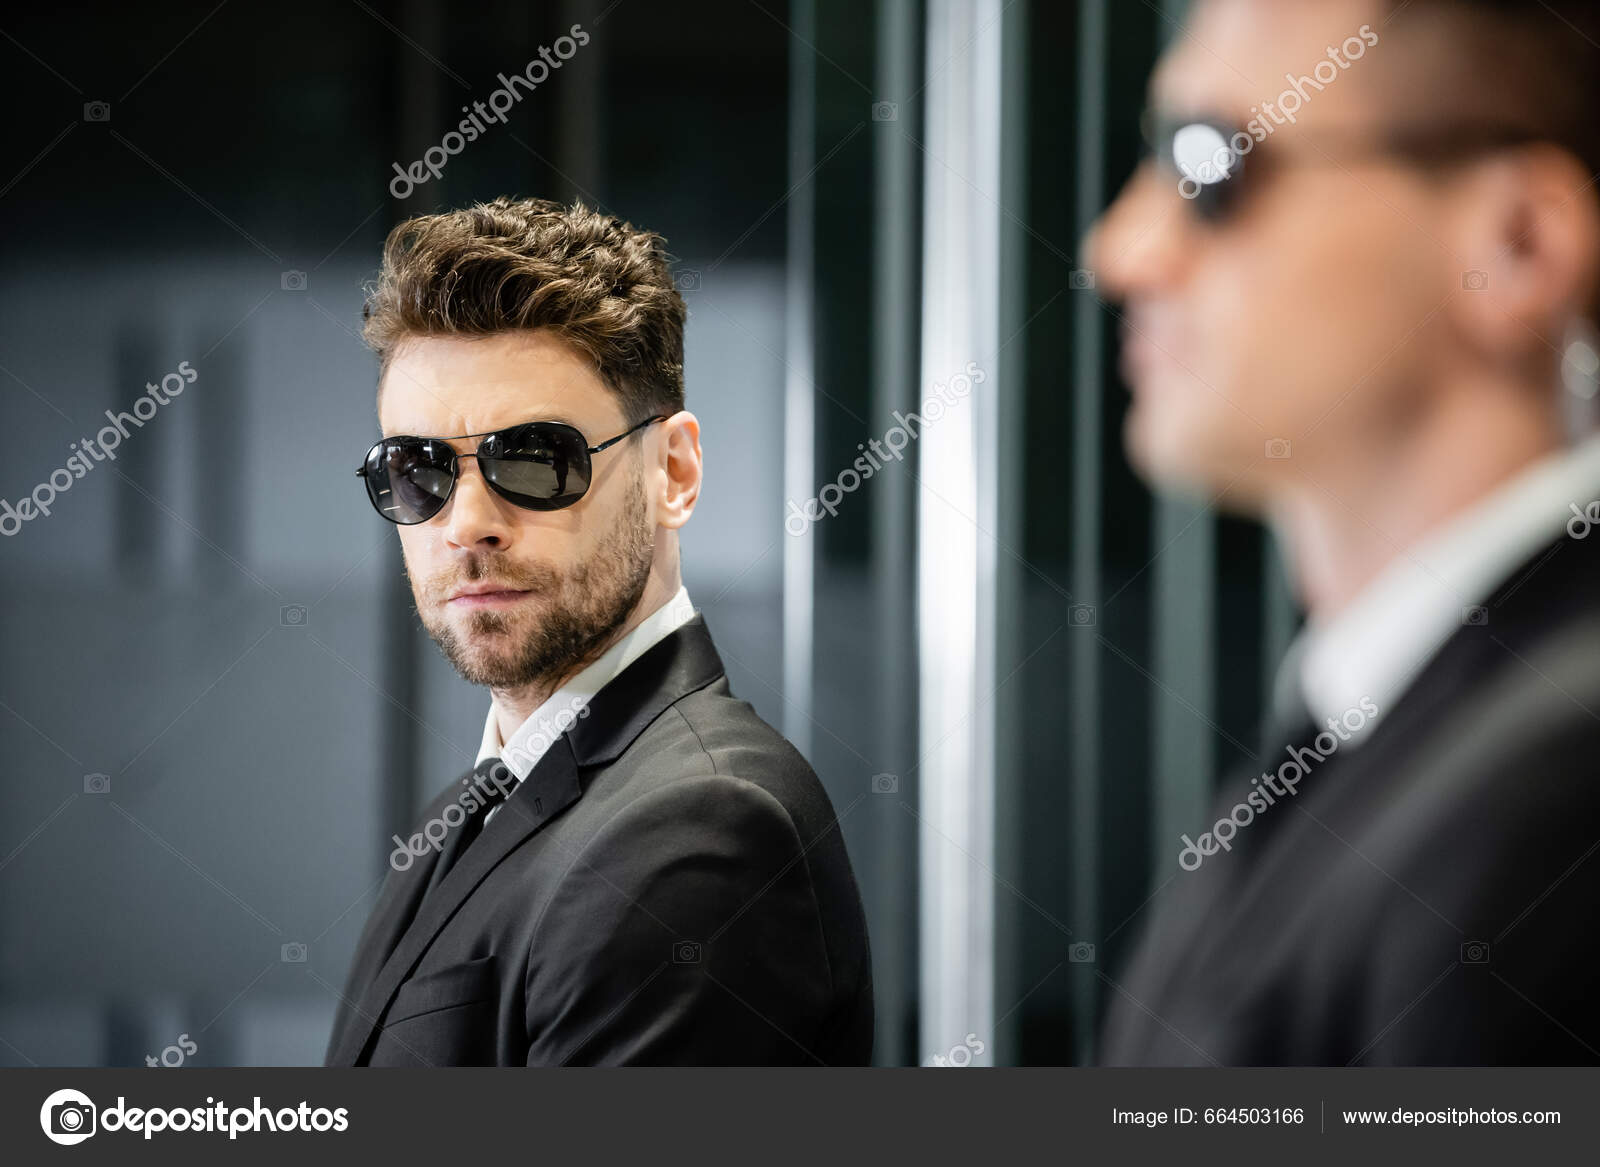 https://st5.depositphotos.com/12985790/66450/i/1600/depositphotos_664503166-stock-photo-bodyguard-service-private-security-handsome.jpg